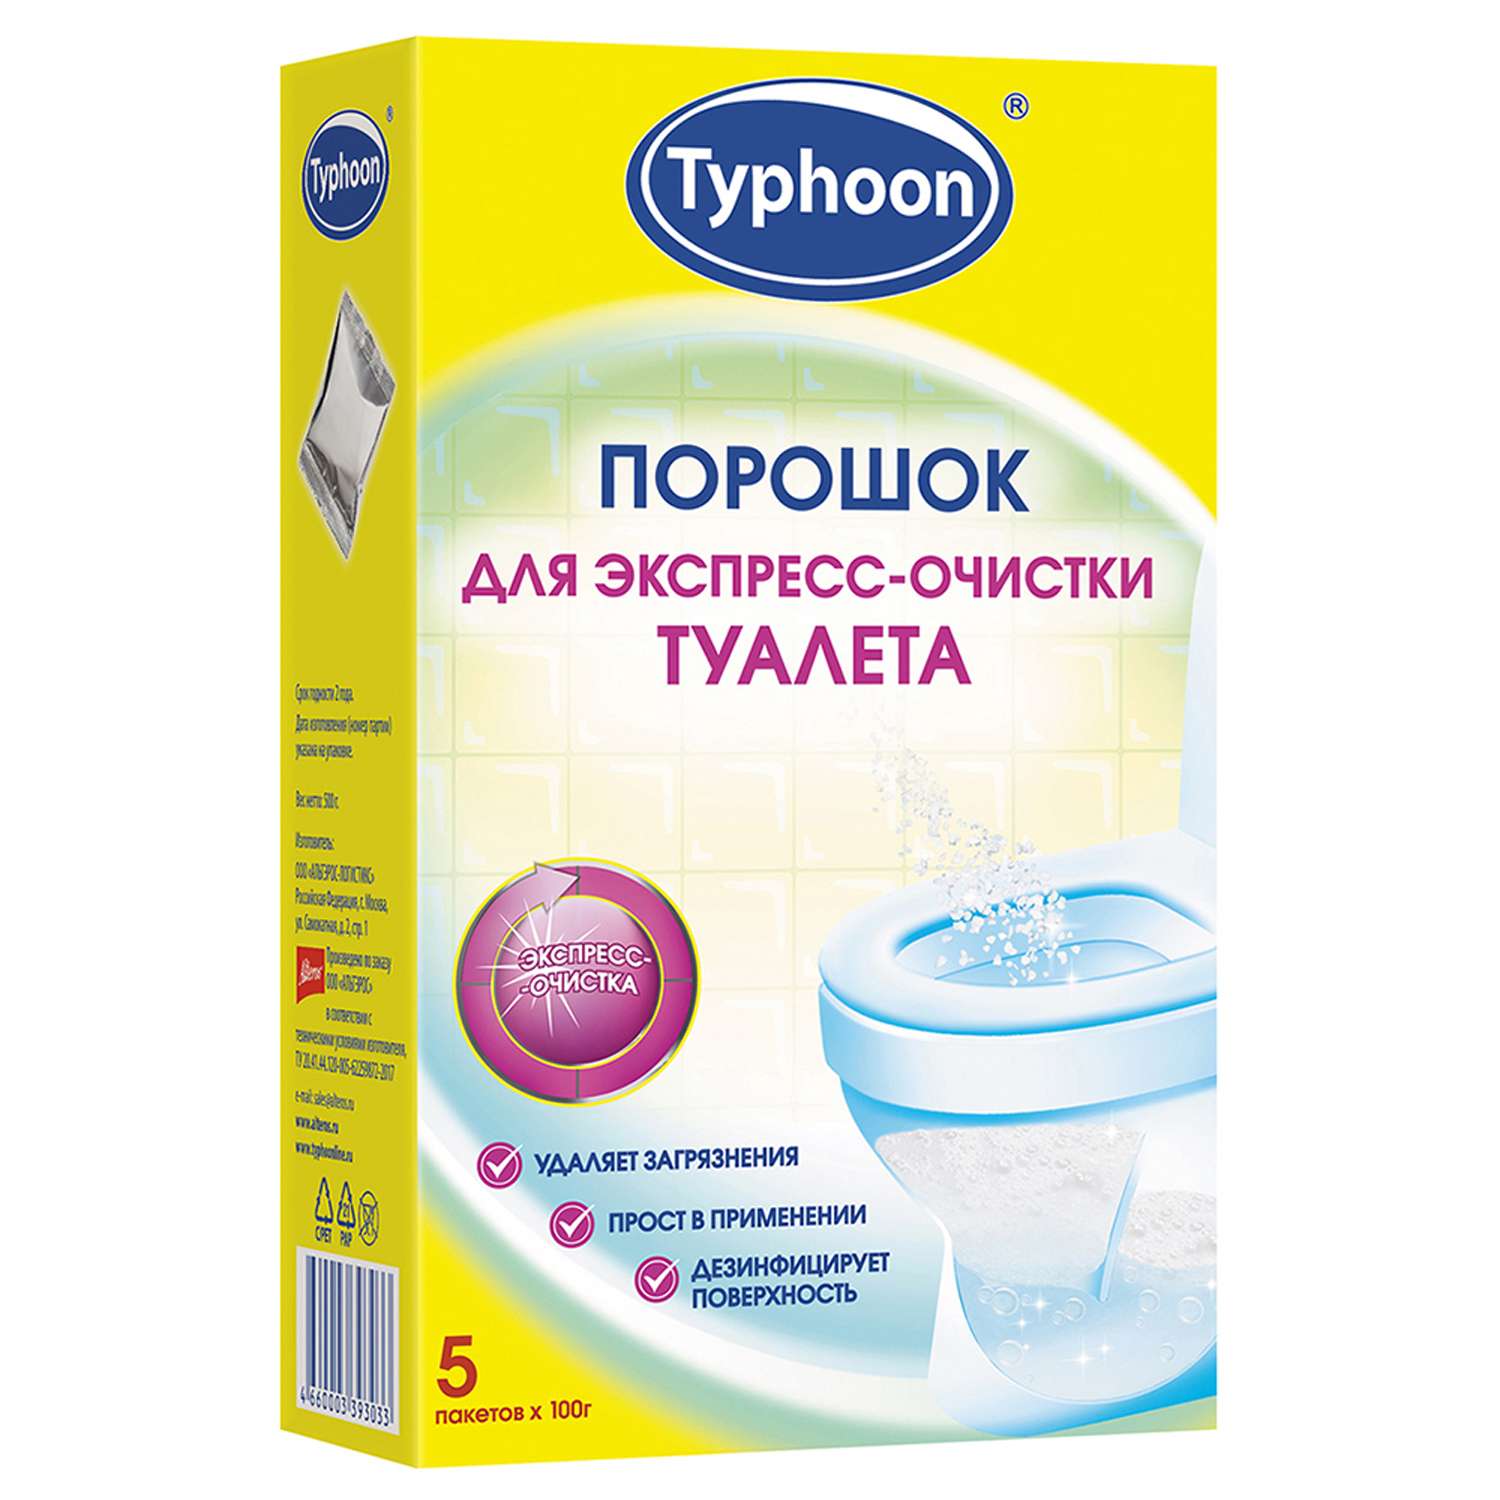 Порошок для очистки туалета Typhoon 5 пакетов по 100 г - фото 2